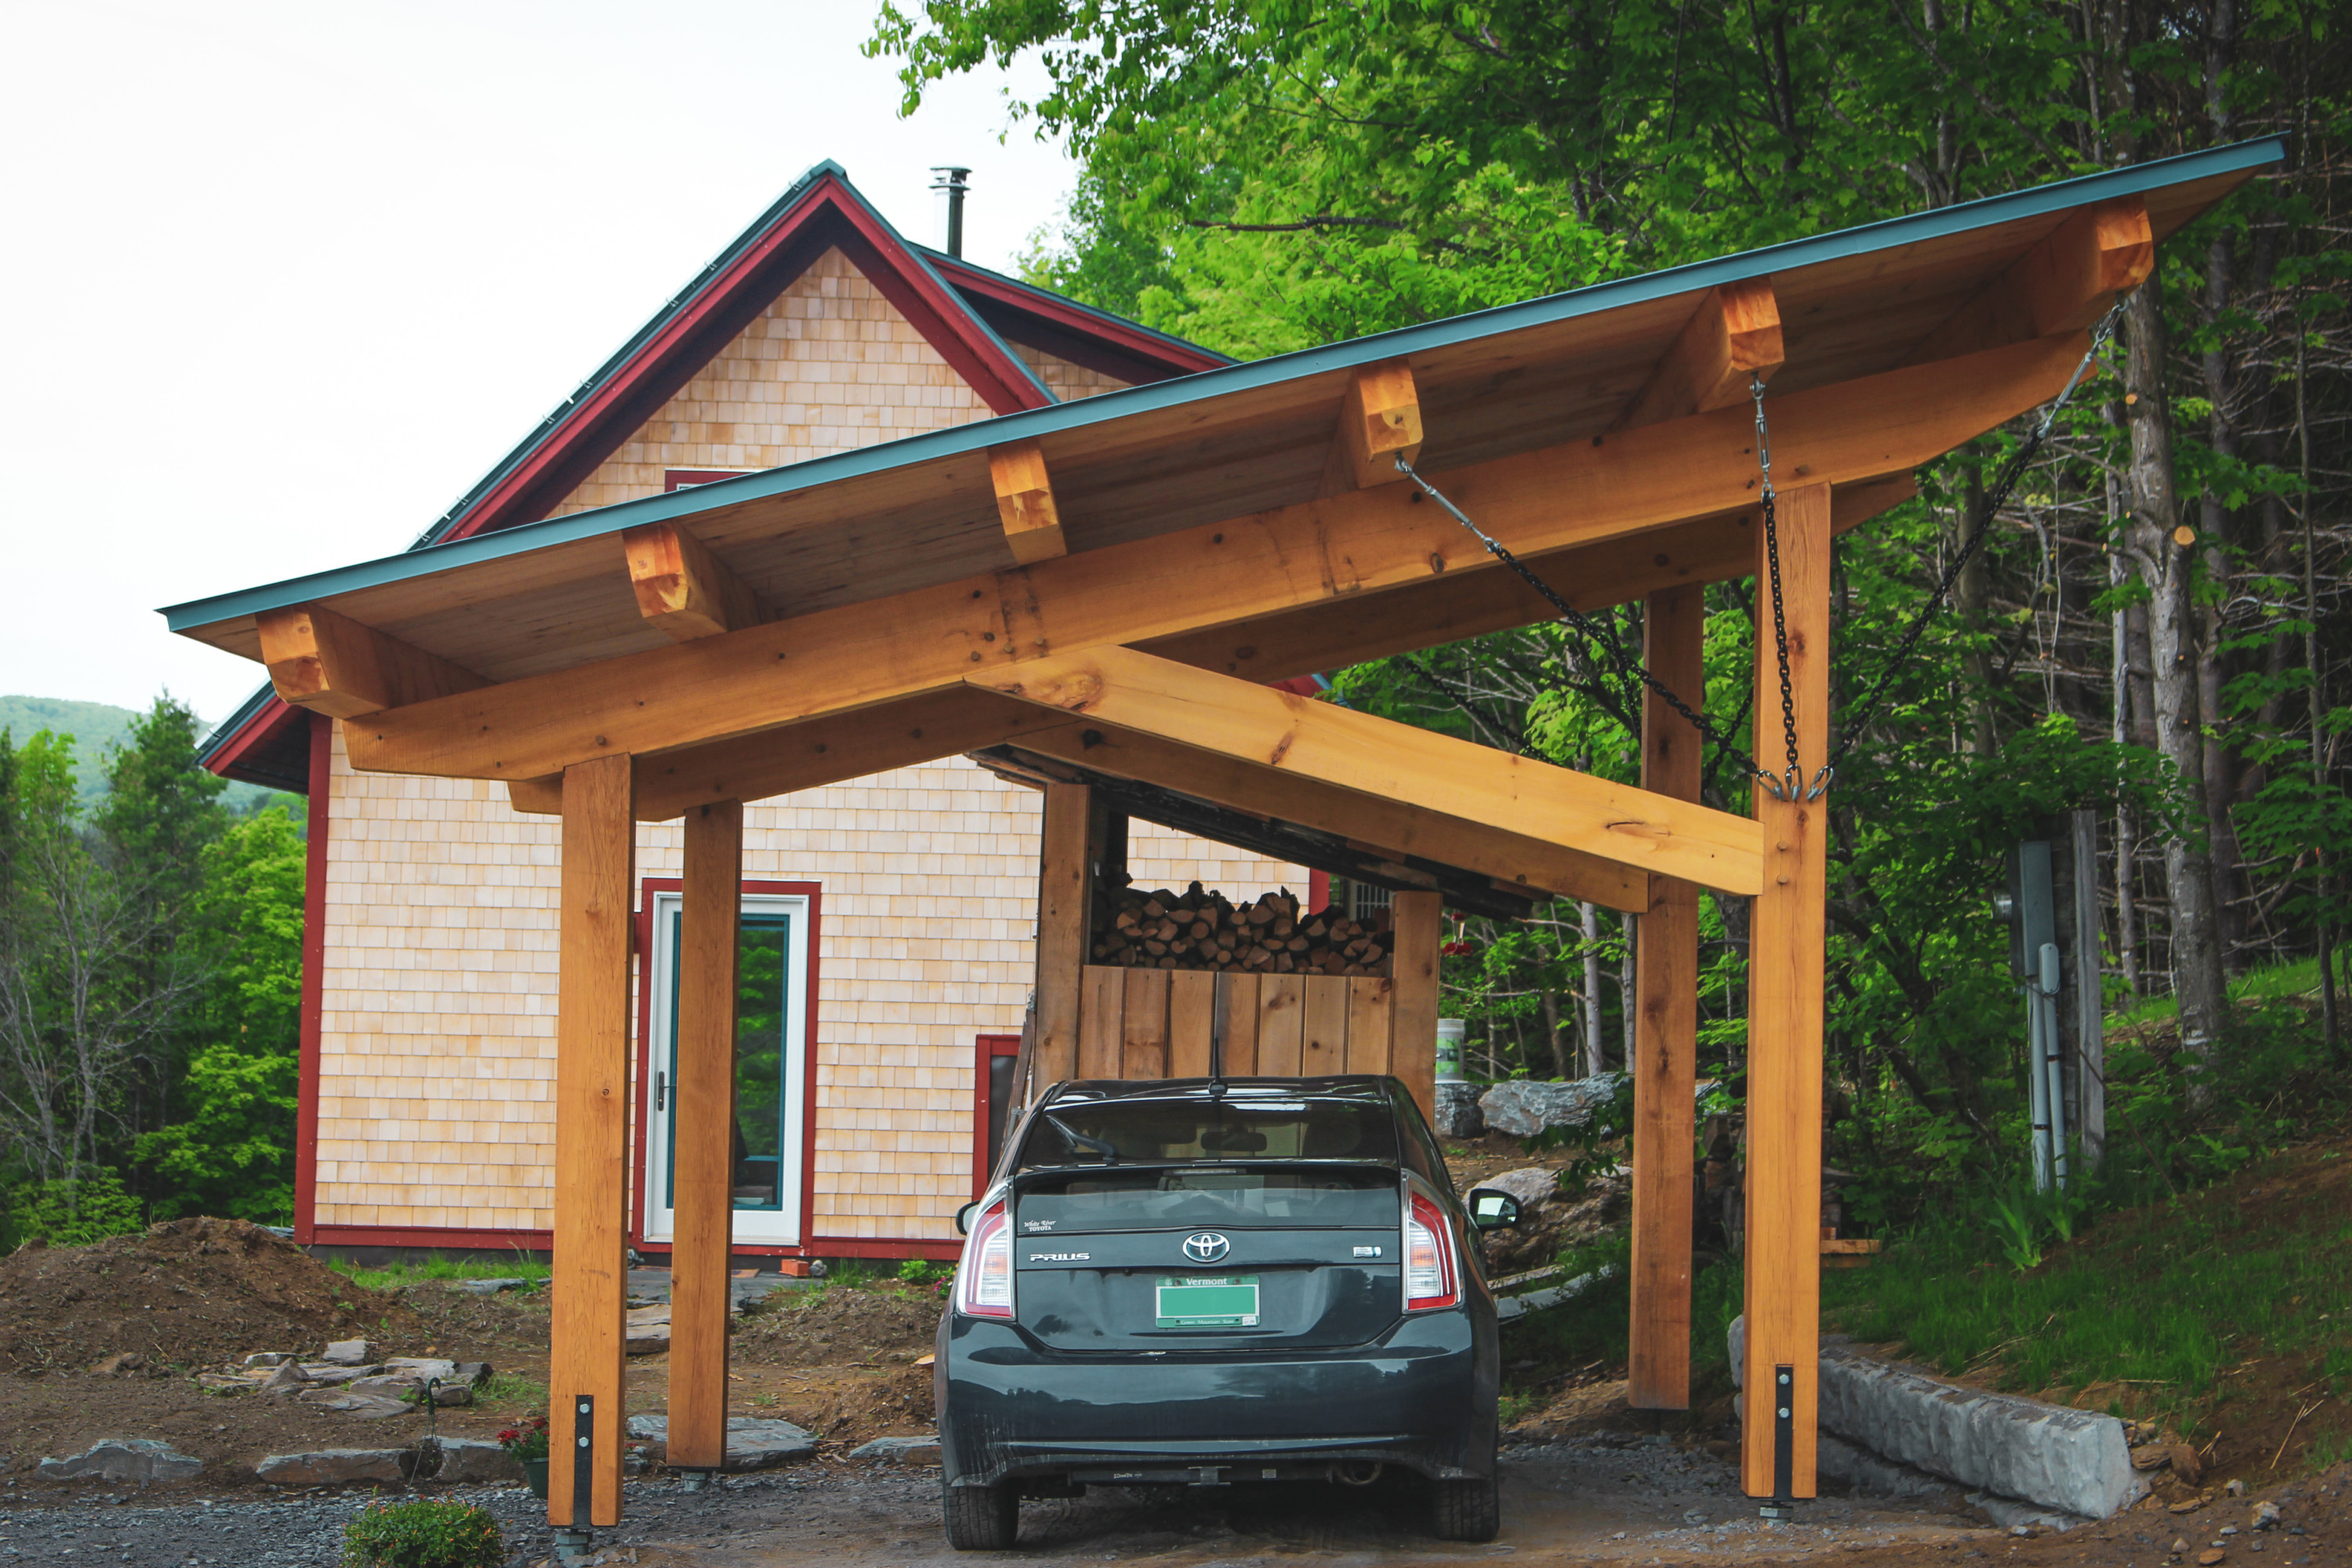 The Vermont Solar Carport